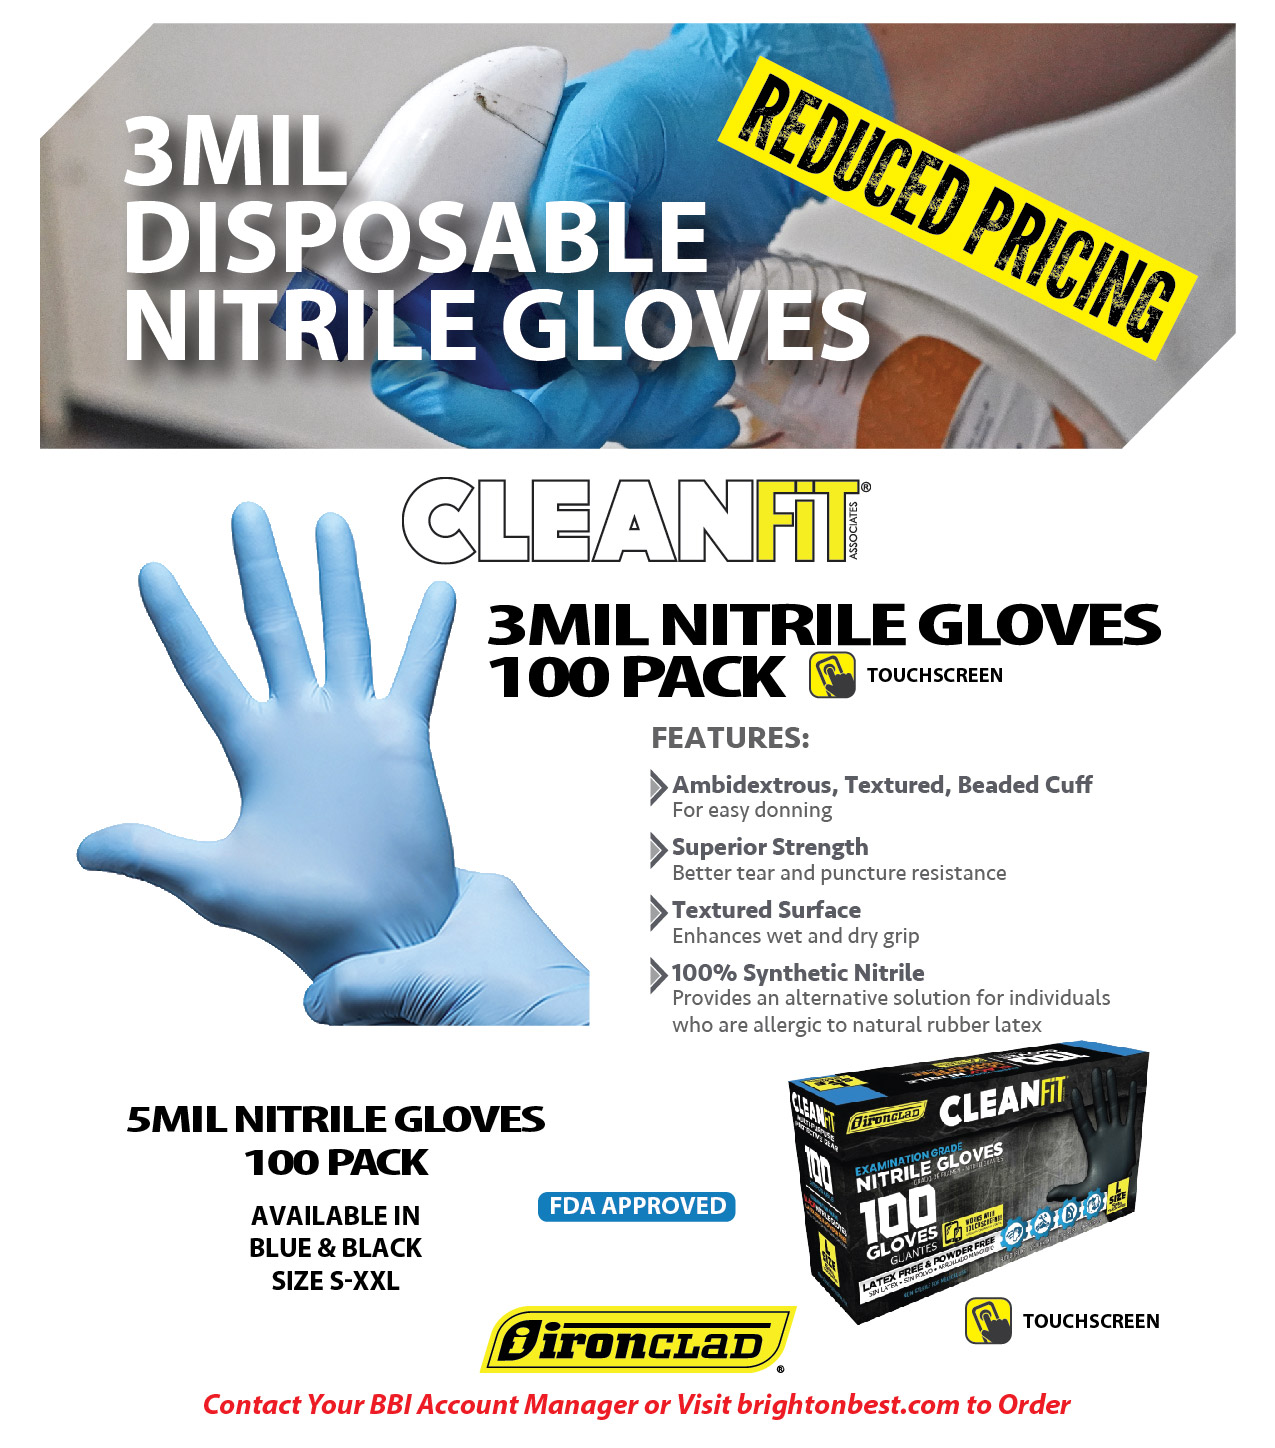 Ironclad CLEANFiT 3MIL & 5MIL Nitrile Gloves